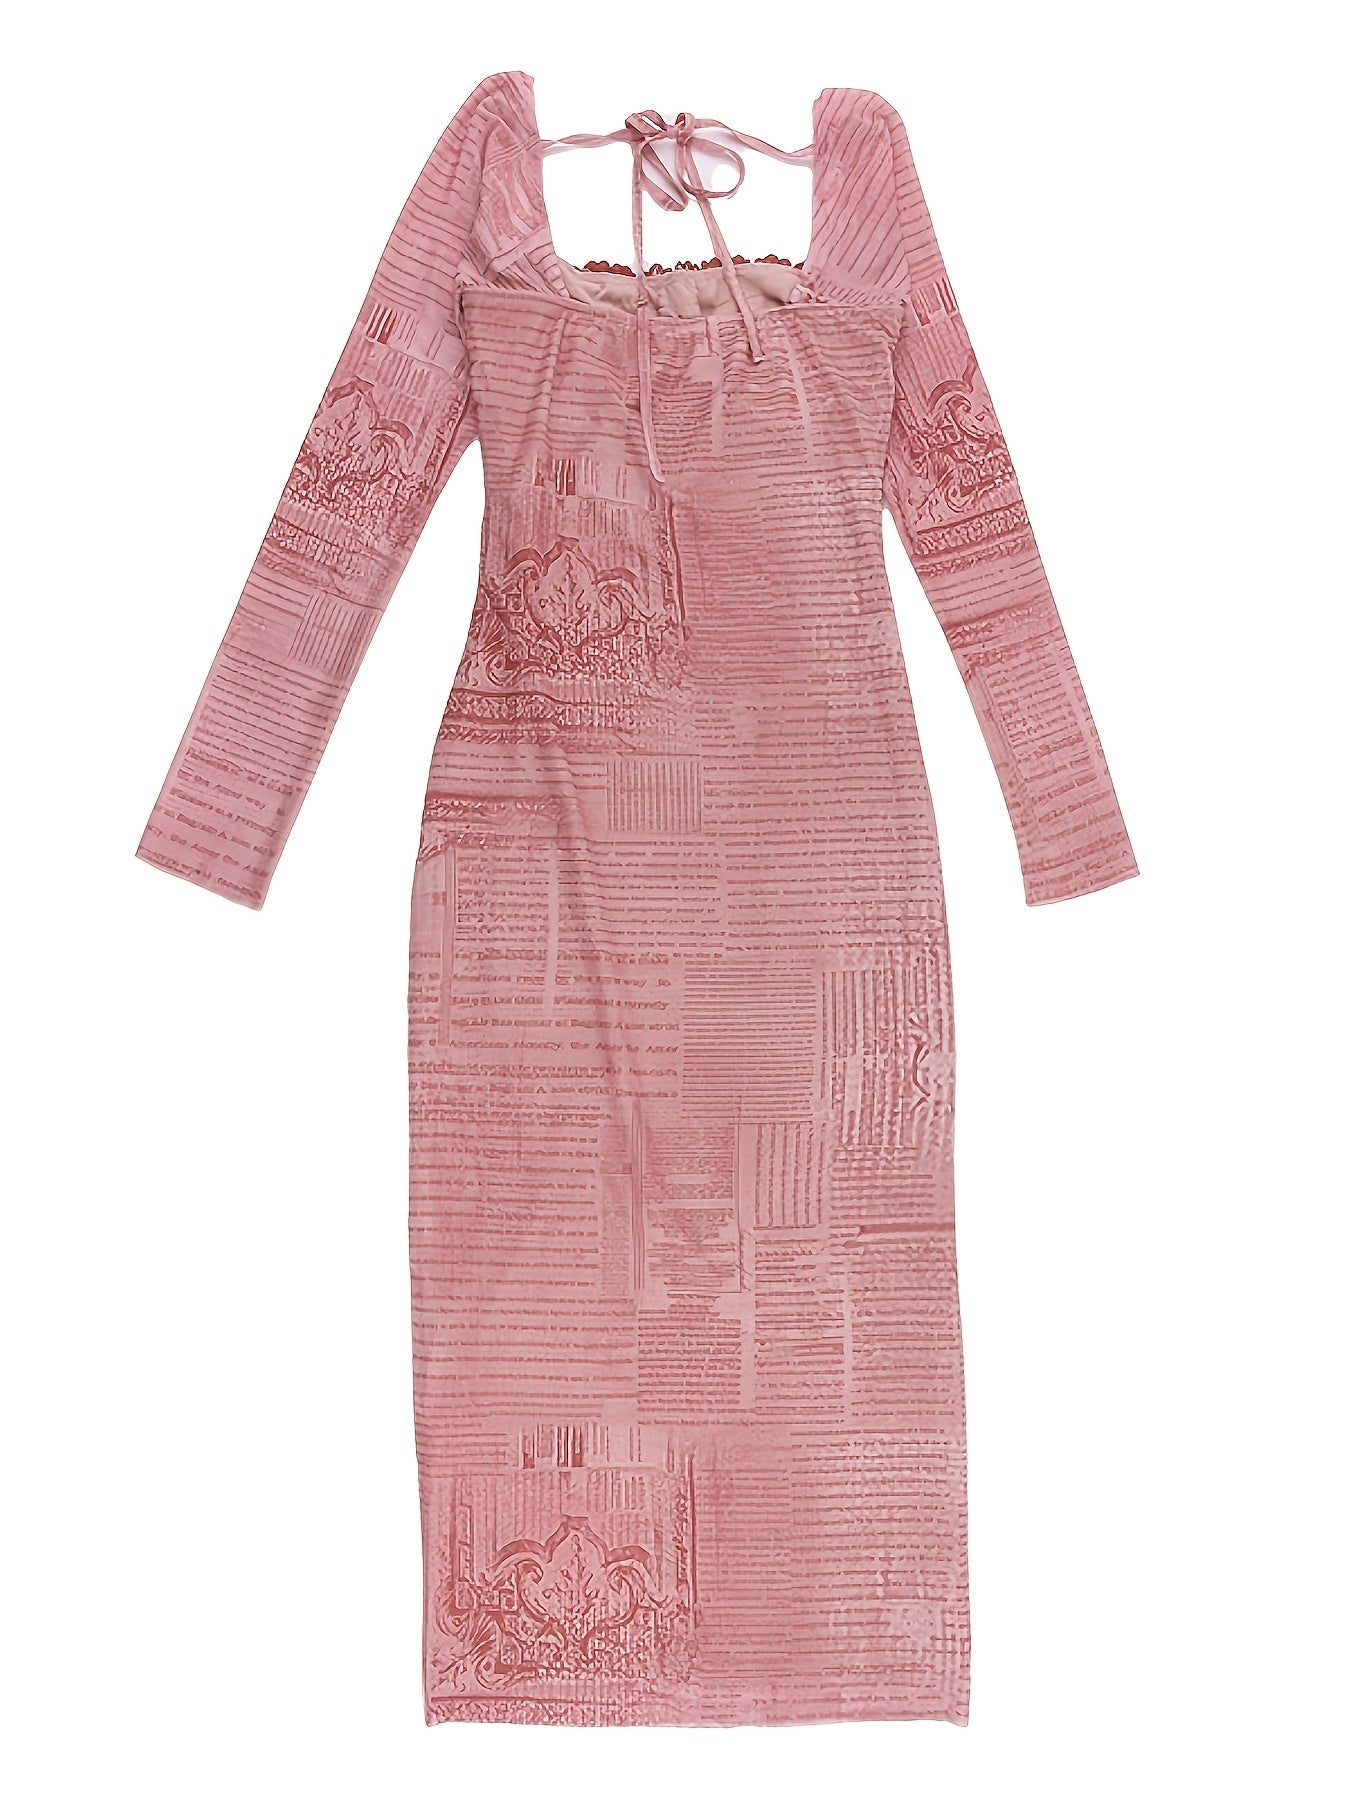 Vzyzv Allover Print Contrast Lace Bodycon Dress, Elegant Sweetheart Neck Long Sleeve Dress, Women's Clothing